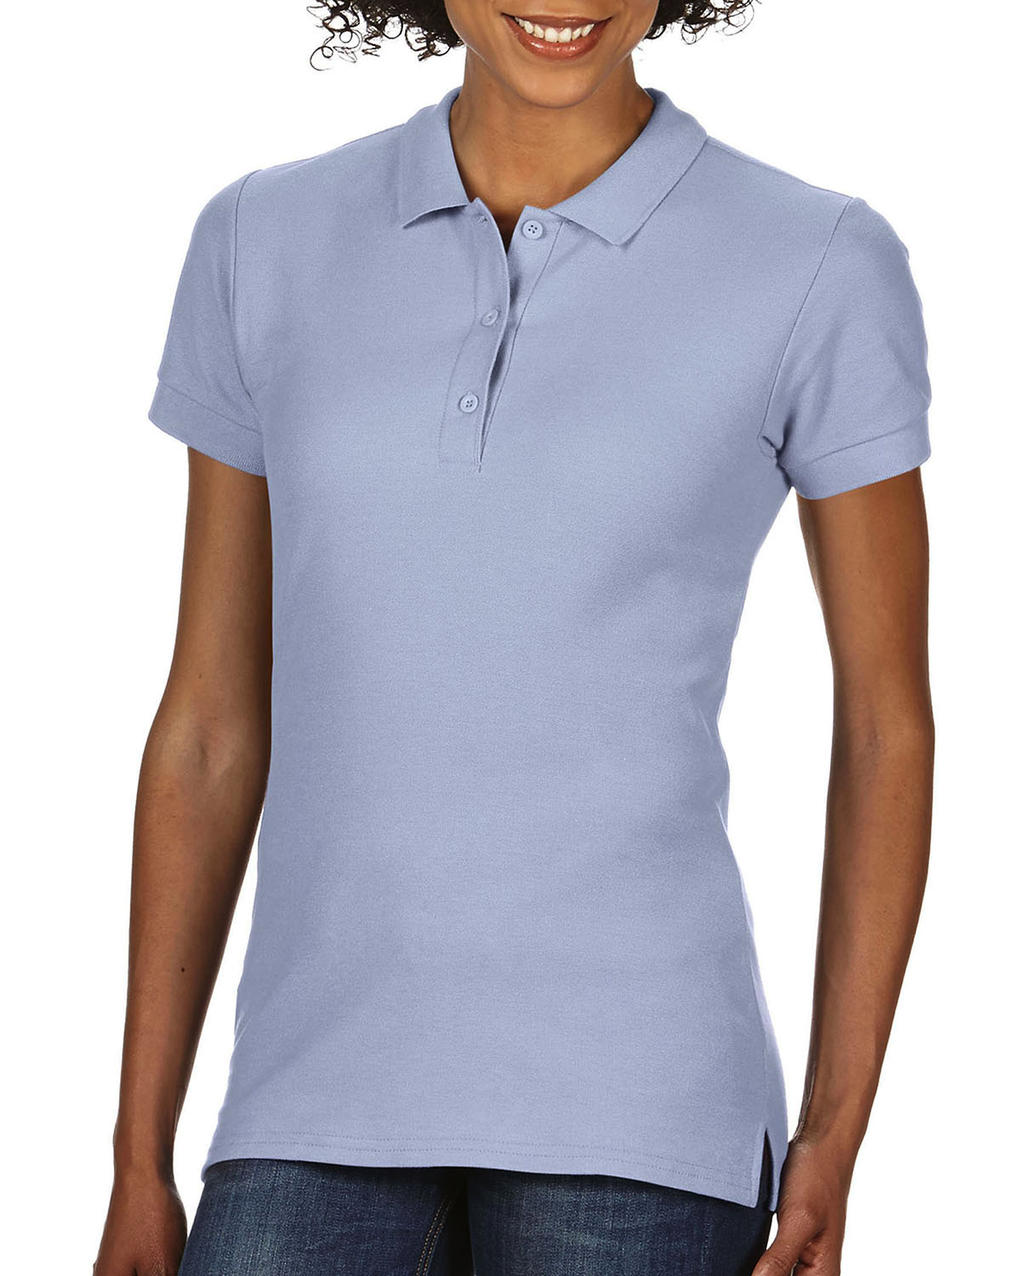 Gildan Premium Cotton Ladies Damen Double Piqué Polo Shirt